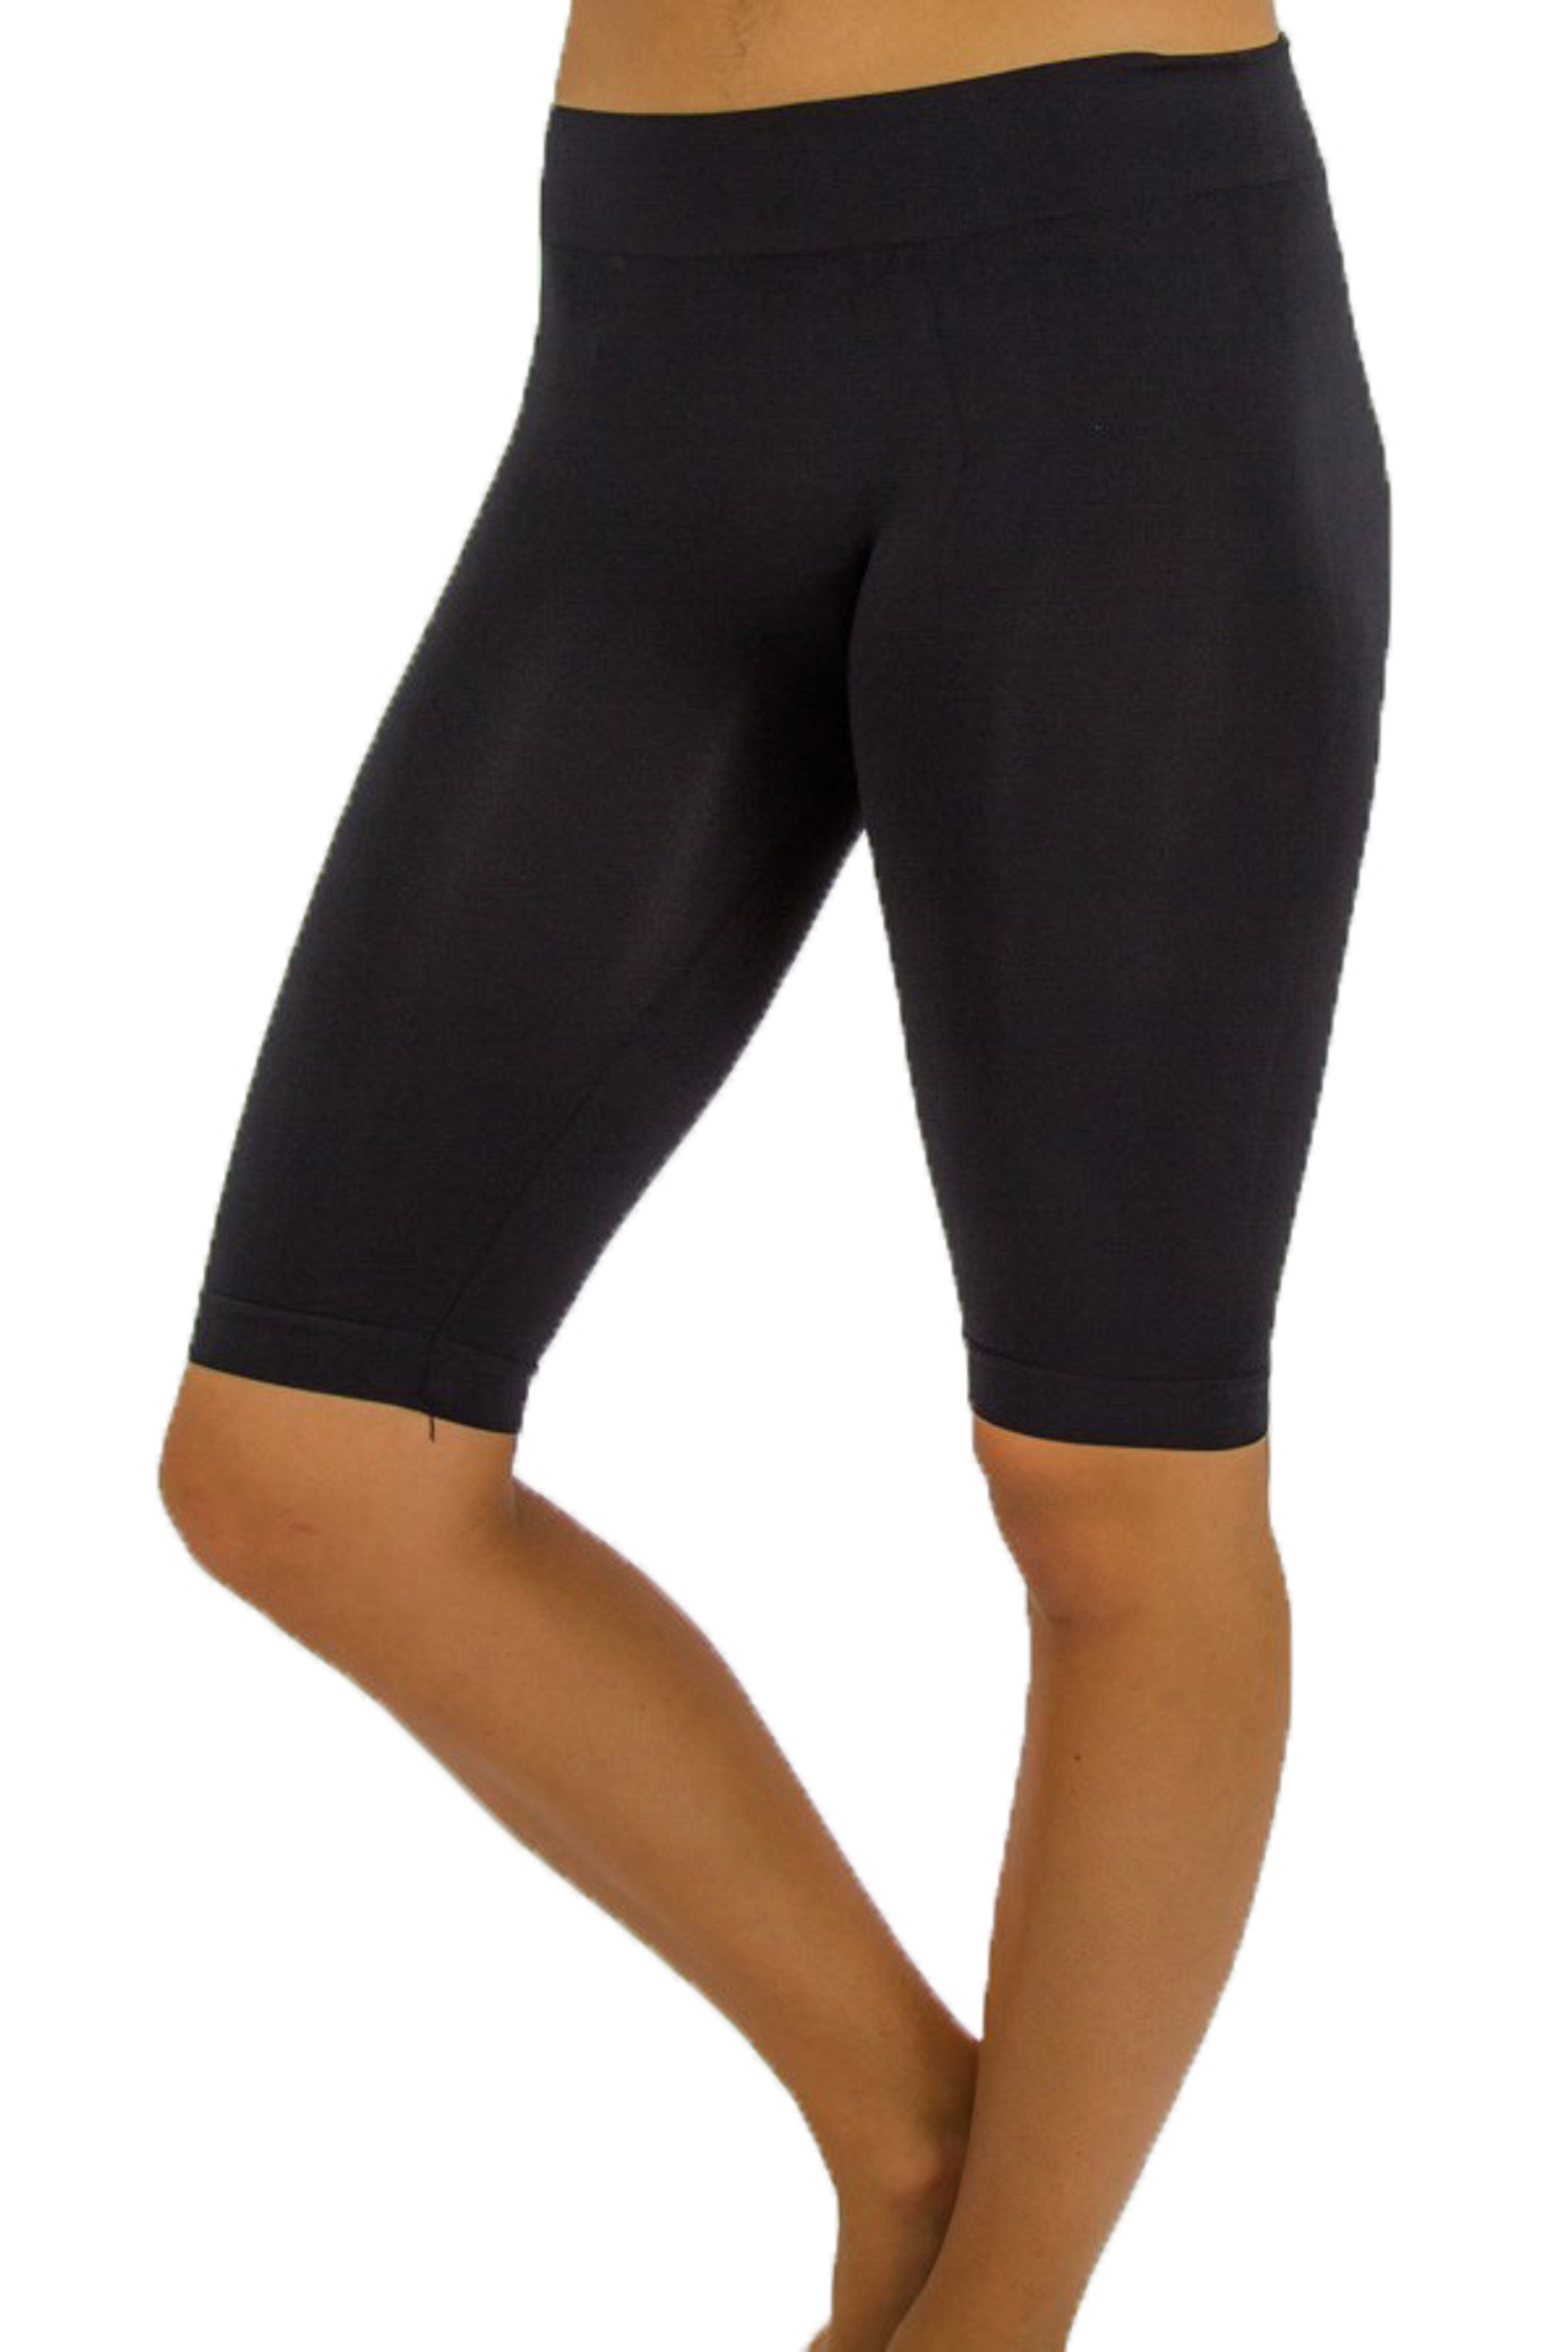 Black Basic Nylon Spandex Biker Shorts - Plus Size